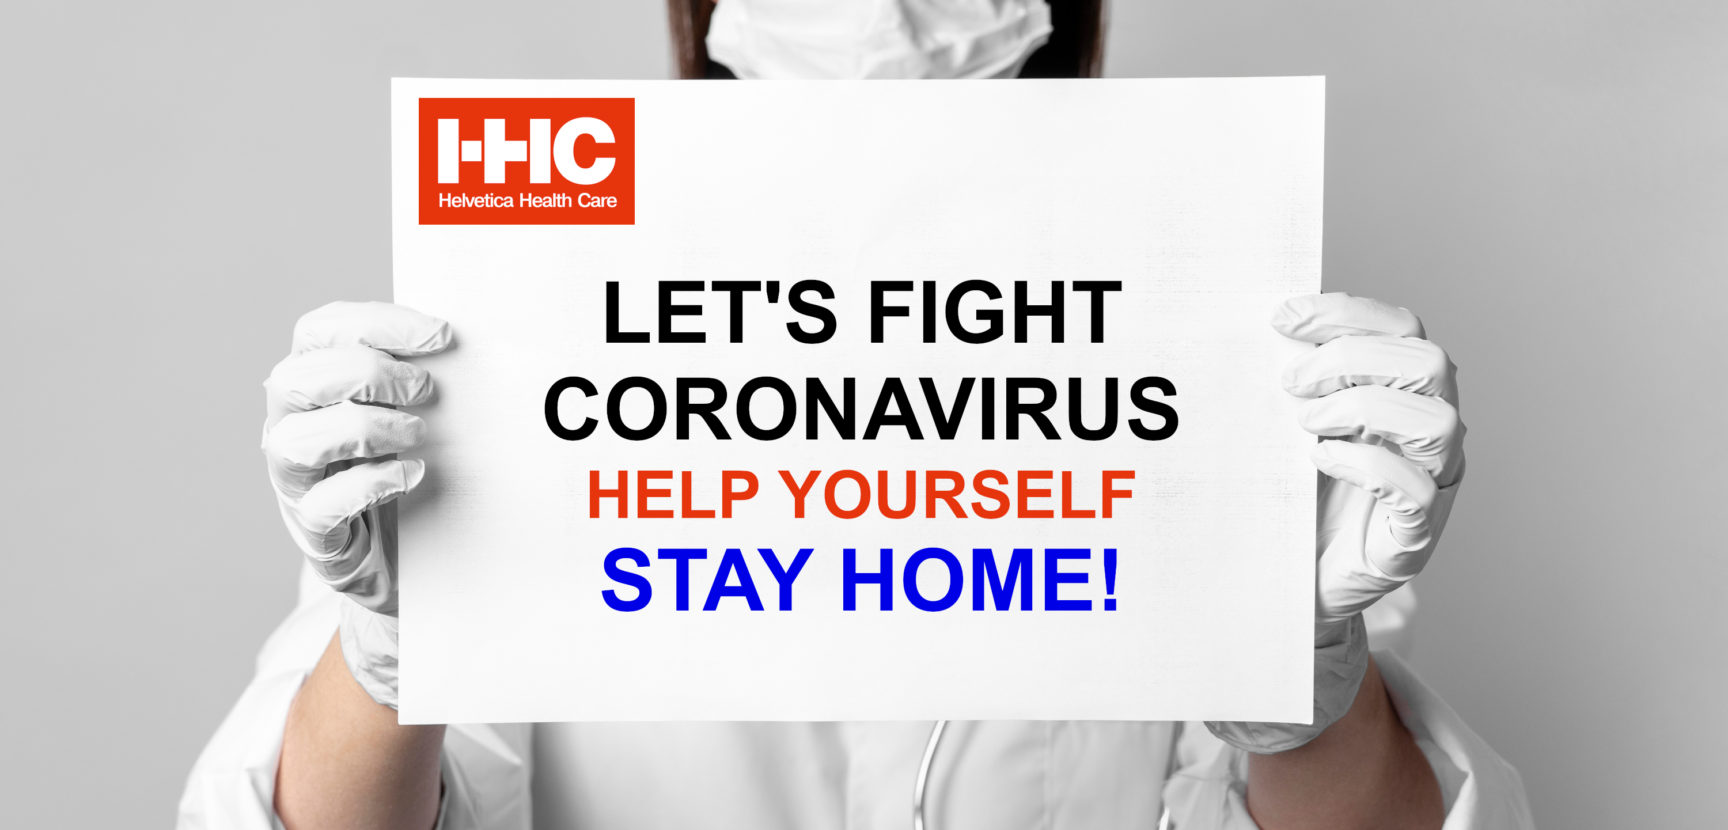 Operations during Coronavirus outbreak